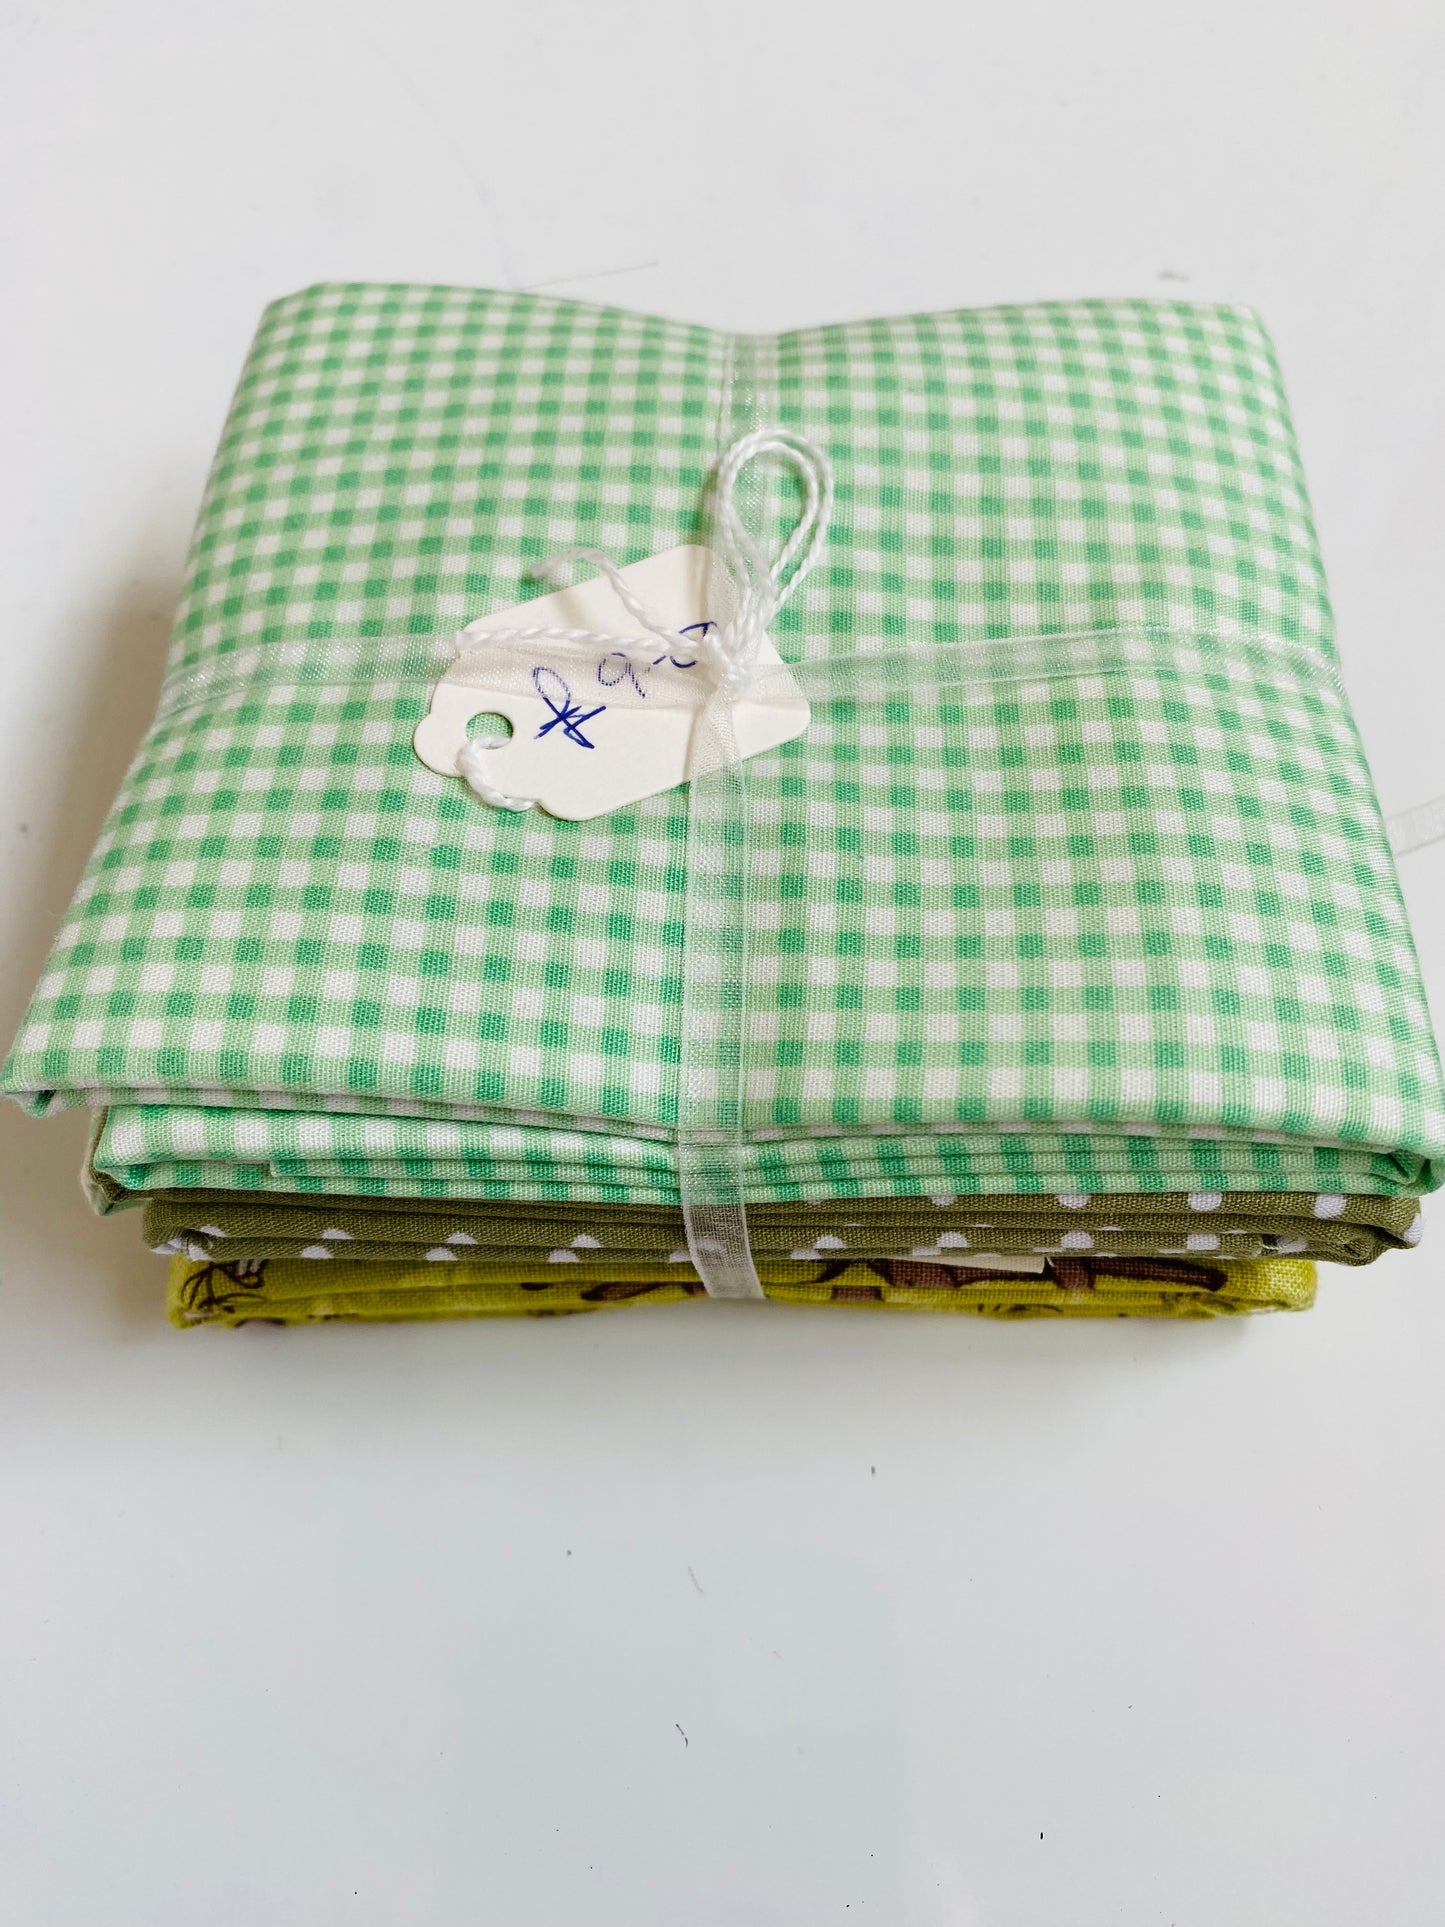 Fabric Fat Quarter Bundle - 'Greens' - 100% Cotton